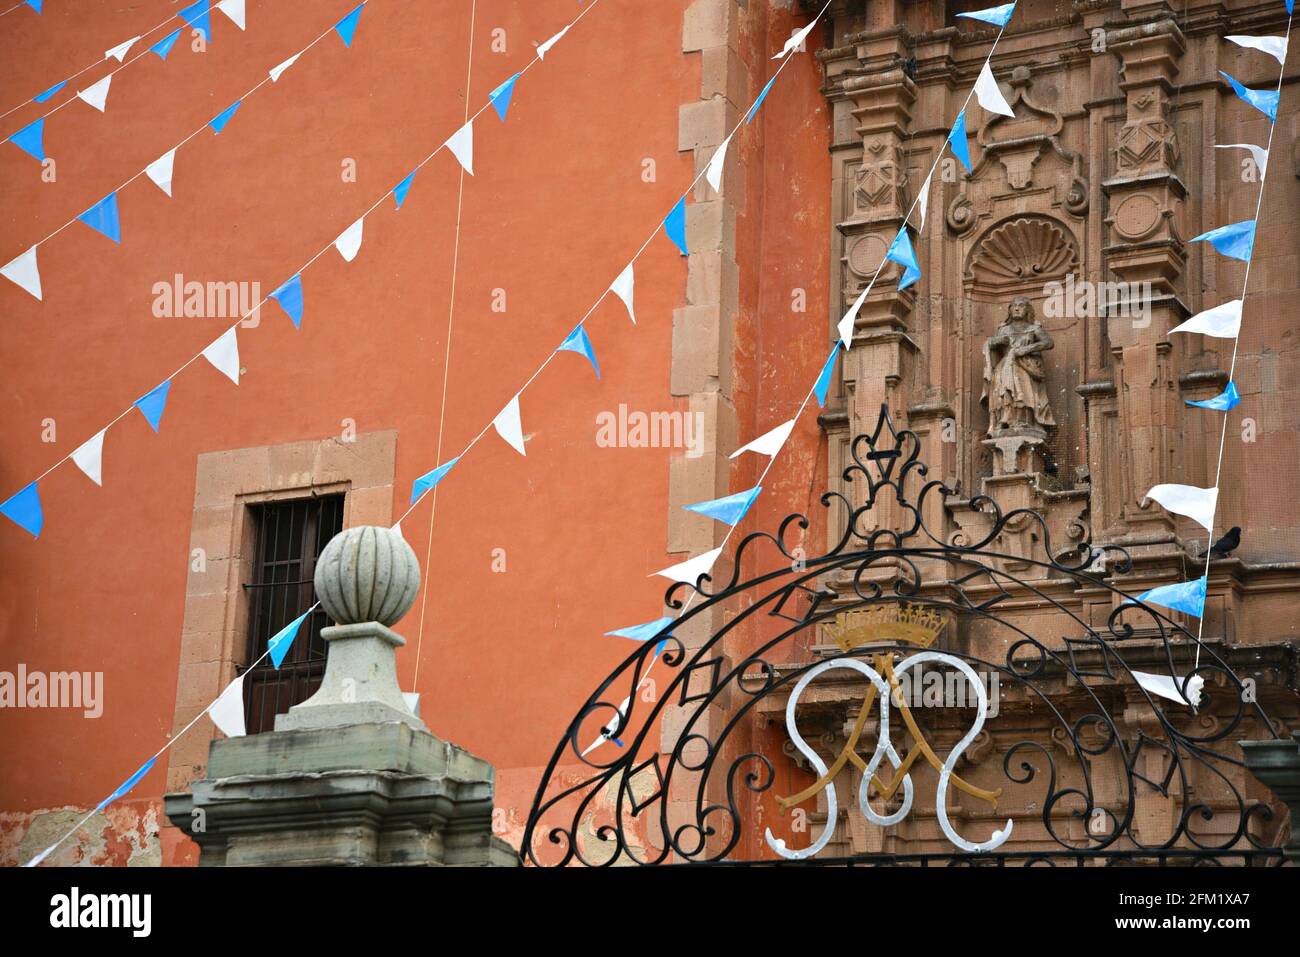 Scenic exterior view of the Baroque style Parroquia del Inmaculado Corazón de María (Belén) with colorful festival banners in Guanajuato Mexico. Stock Photo